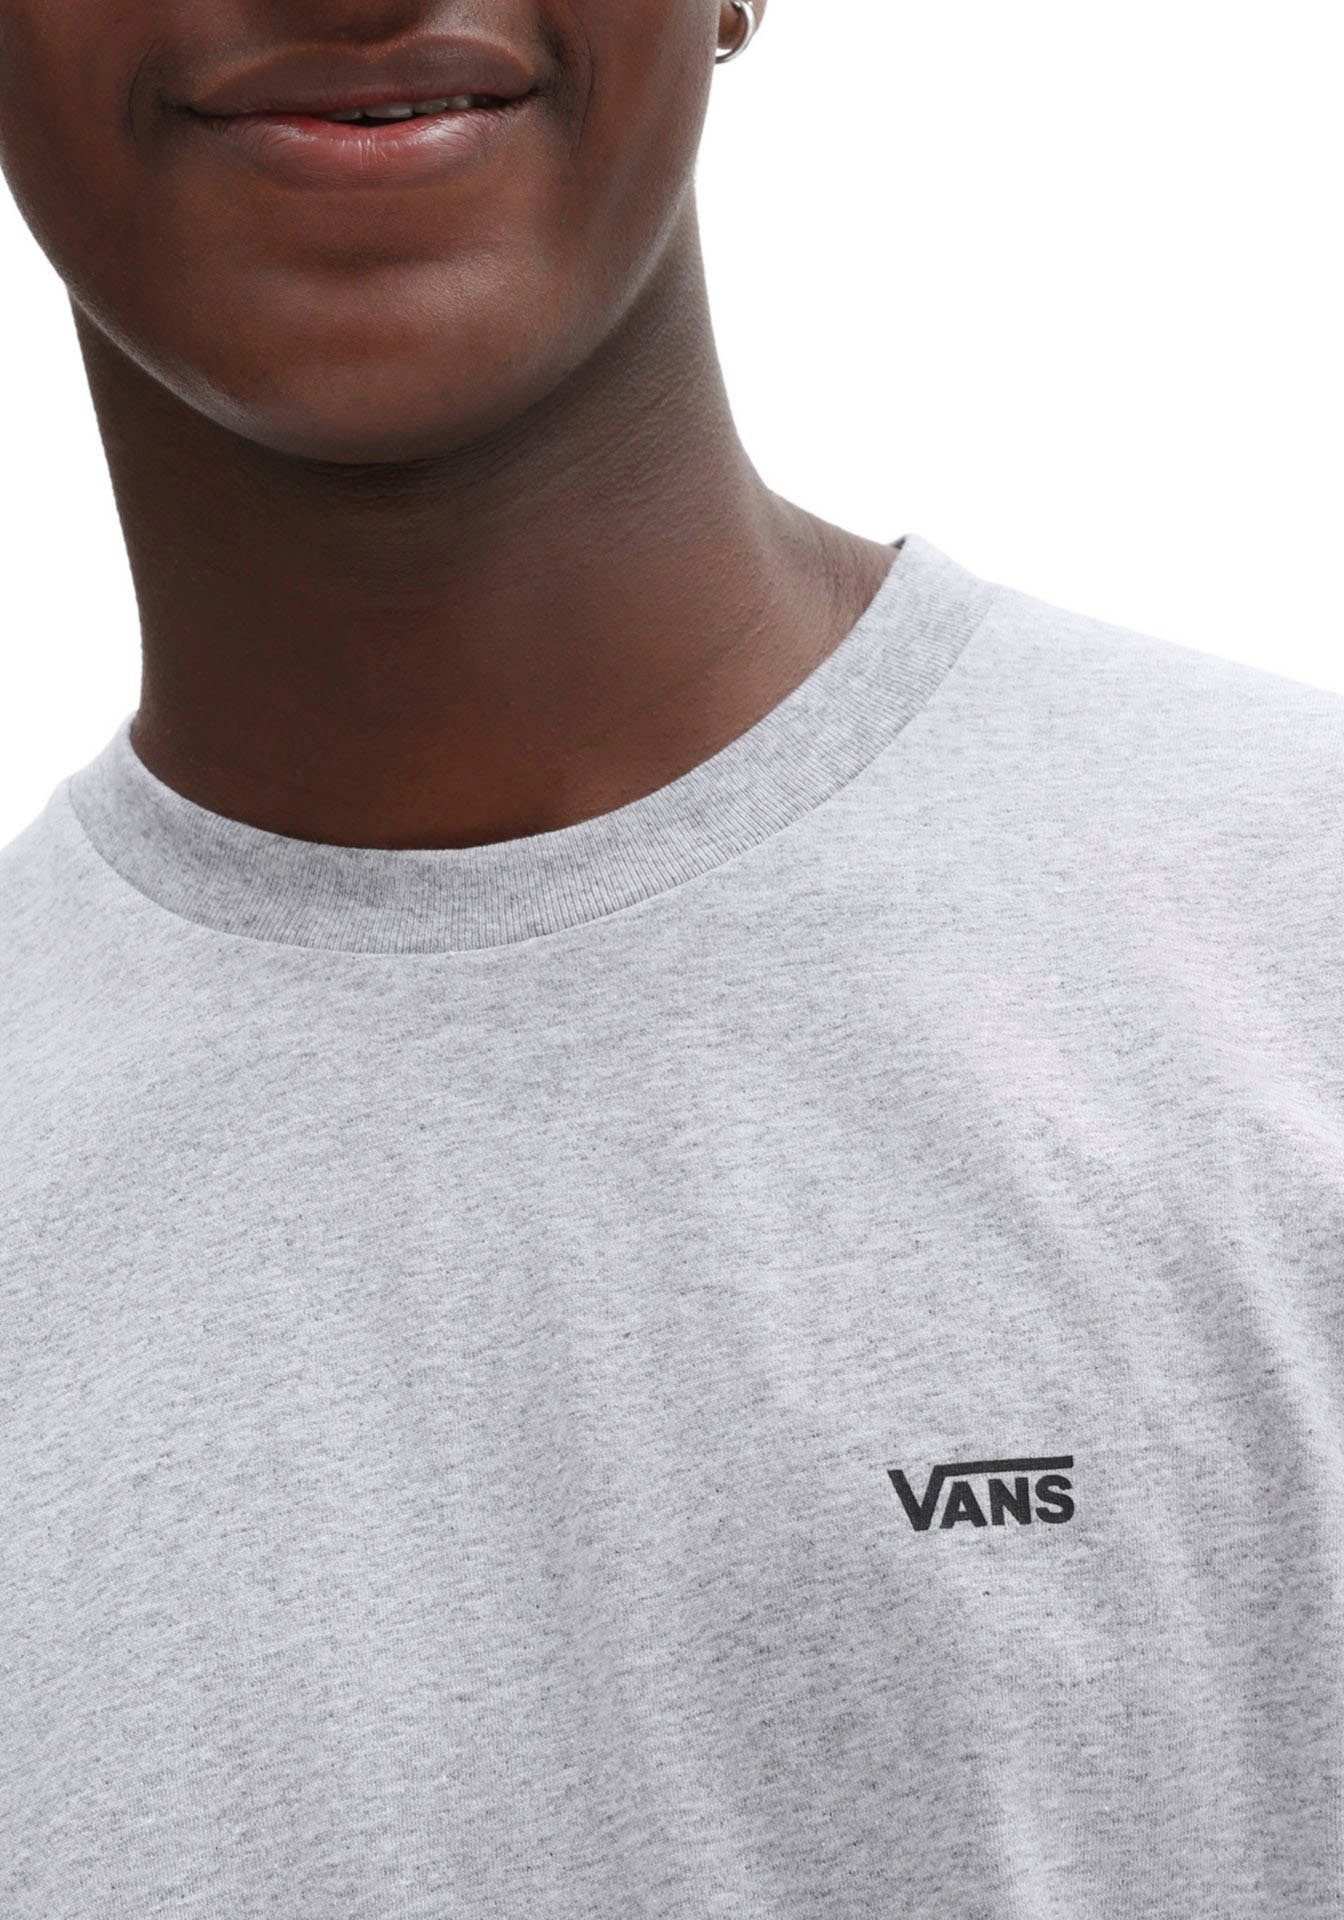 grau-schwarz LEFT LOGO TEE Vans CHEST T-Shirt